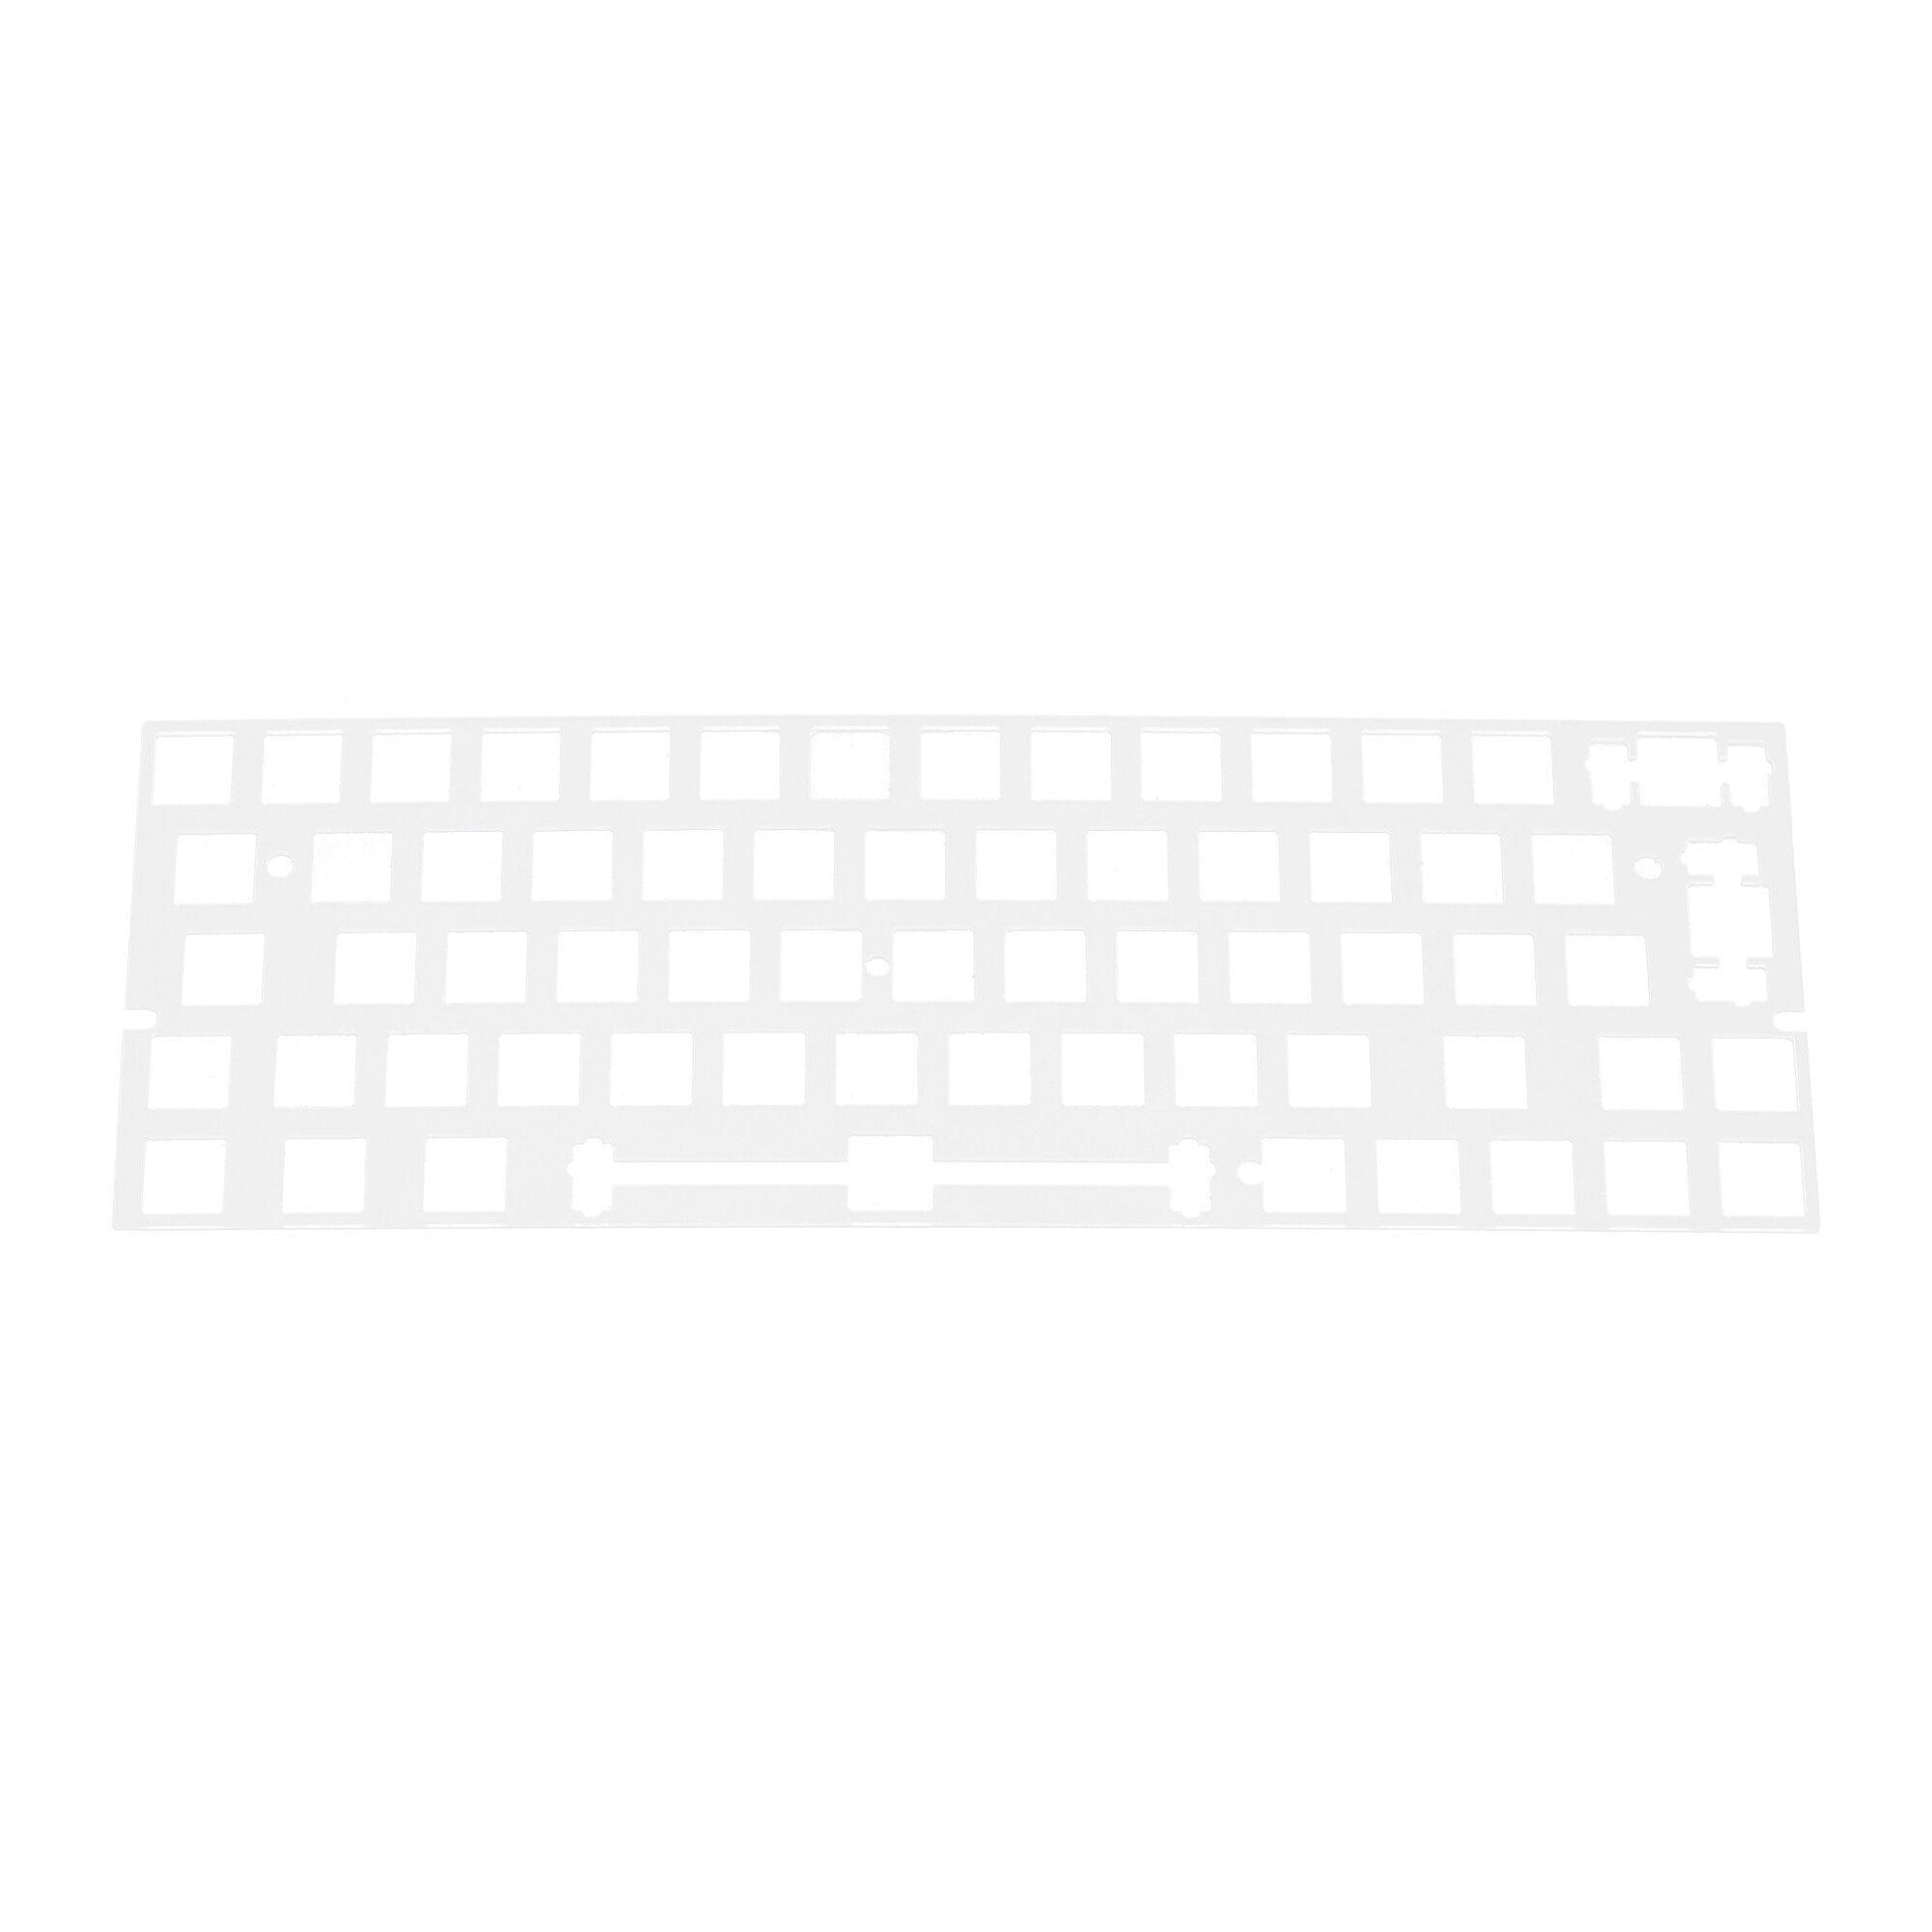 60% PC Polycarbonate Mechanical Keyboard Plate  Custom Keyboards UK   